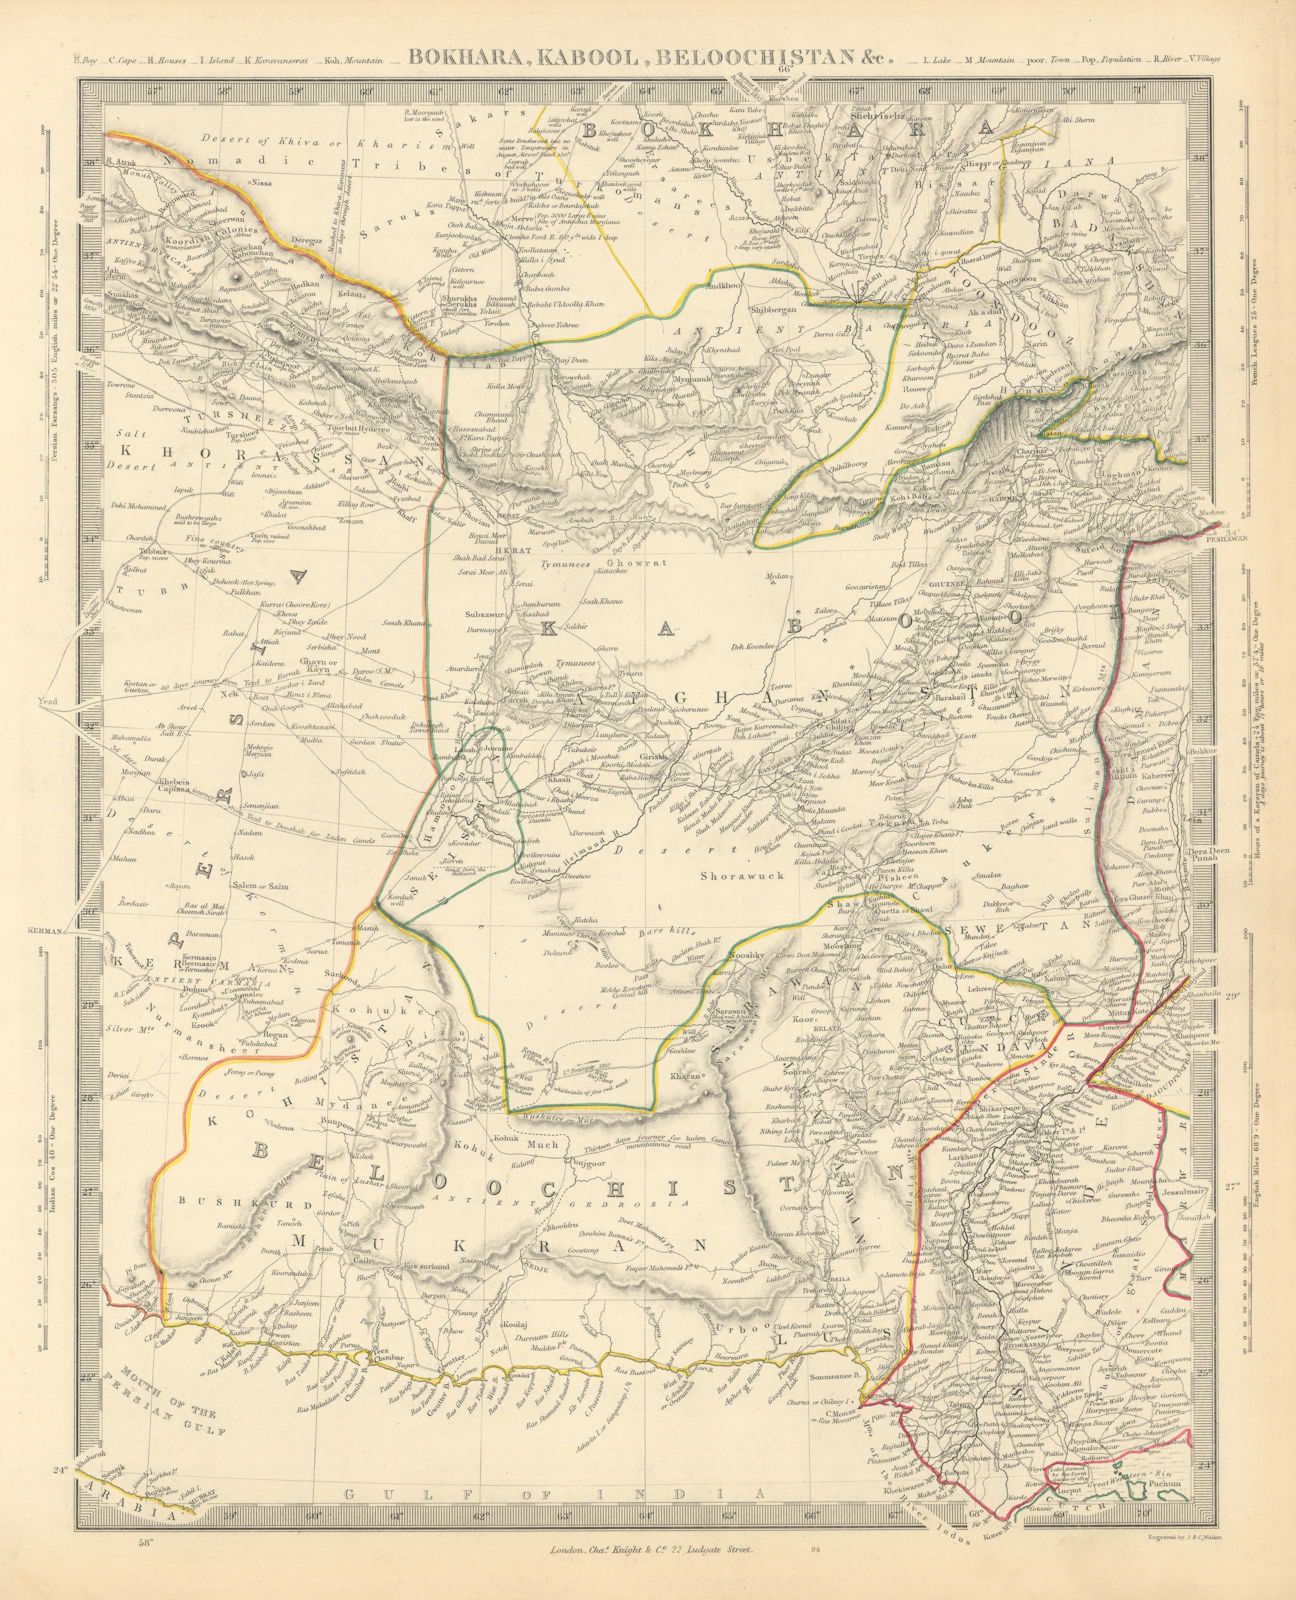 BOKHARA KABUL & BALUCHISTAN. Afghanistan Khorassan Sinde Pakistan. SDUK 1851 map